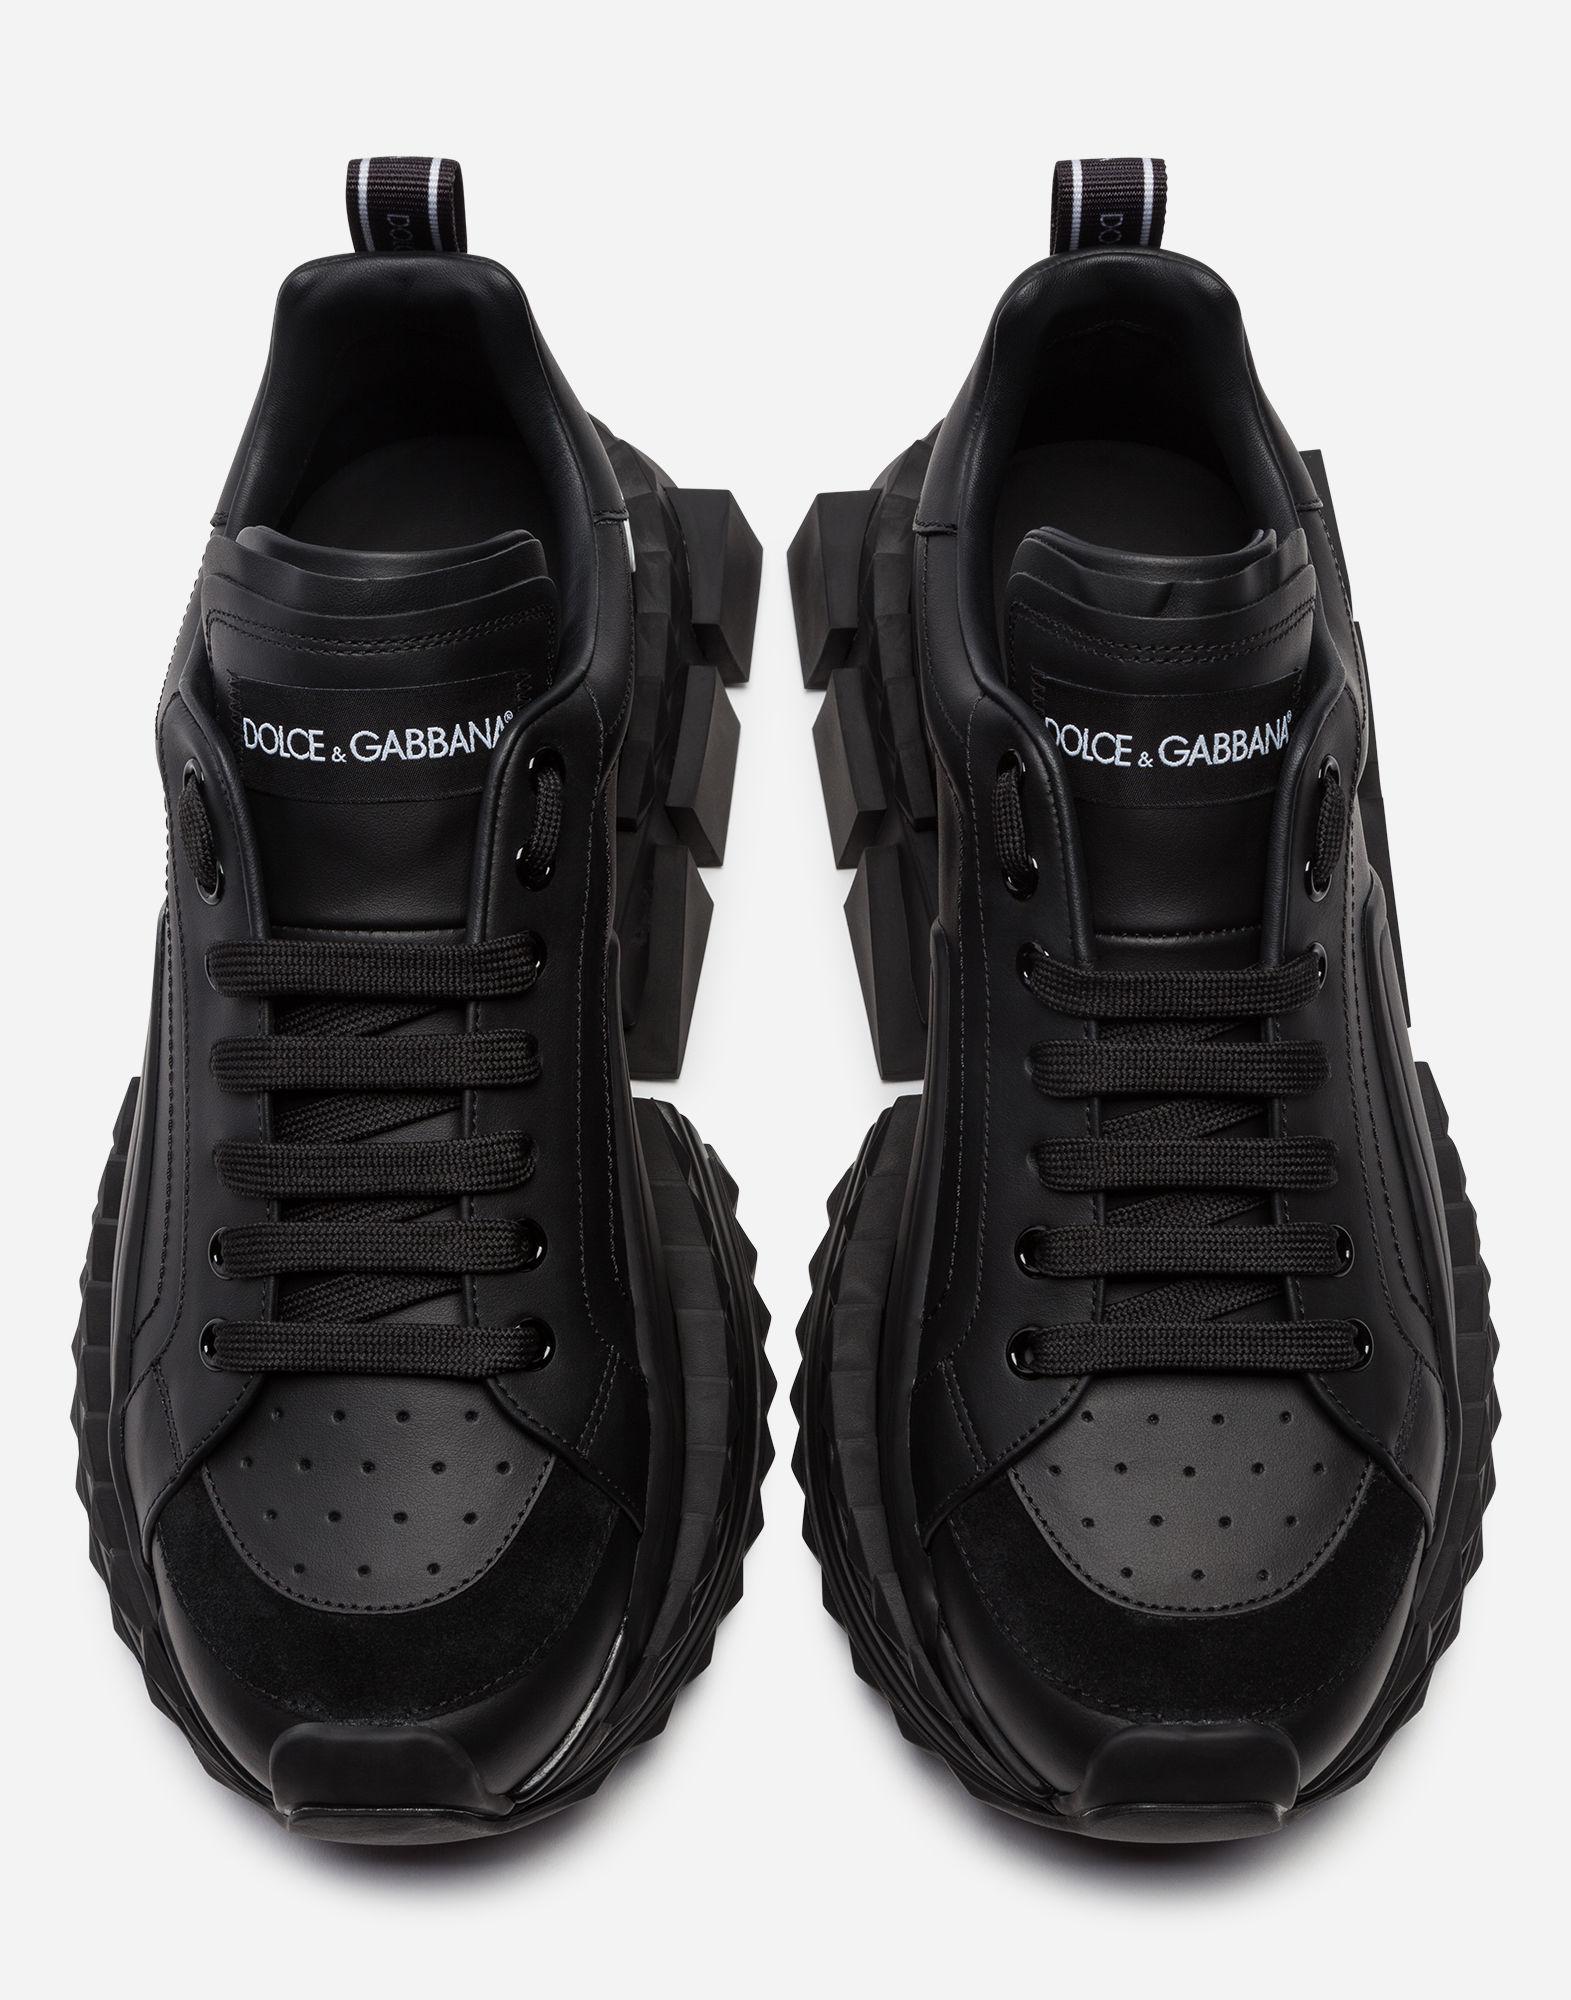 Dolce & Gabbana Super King Sneakers in Black | Lyst